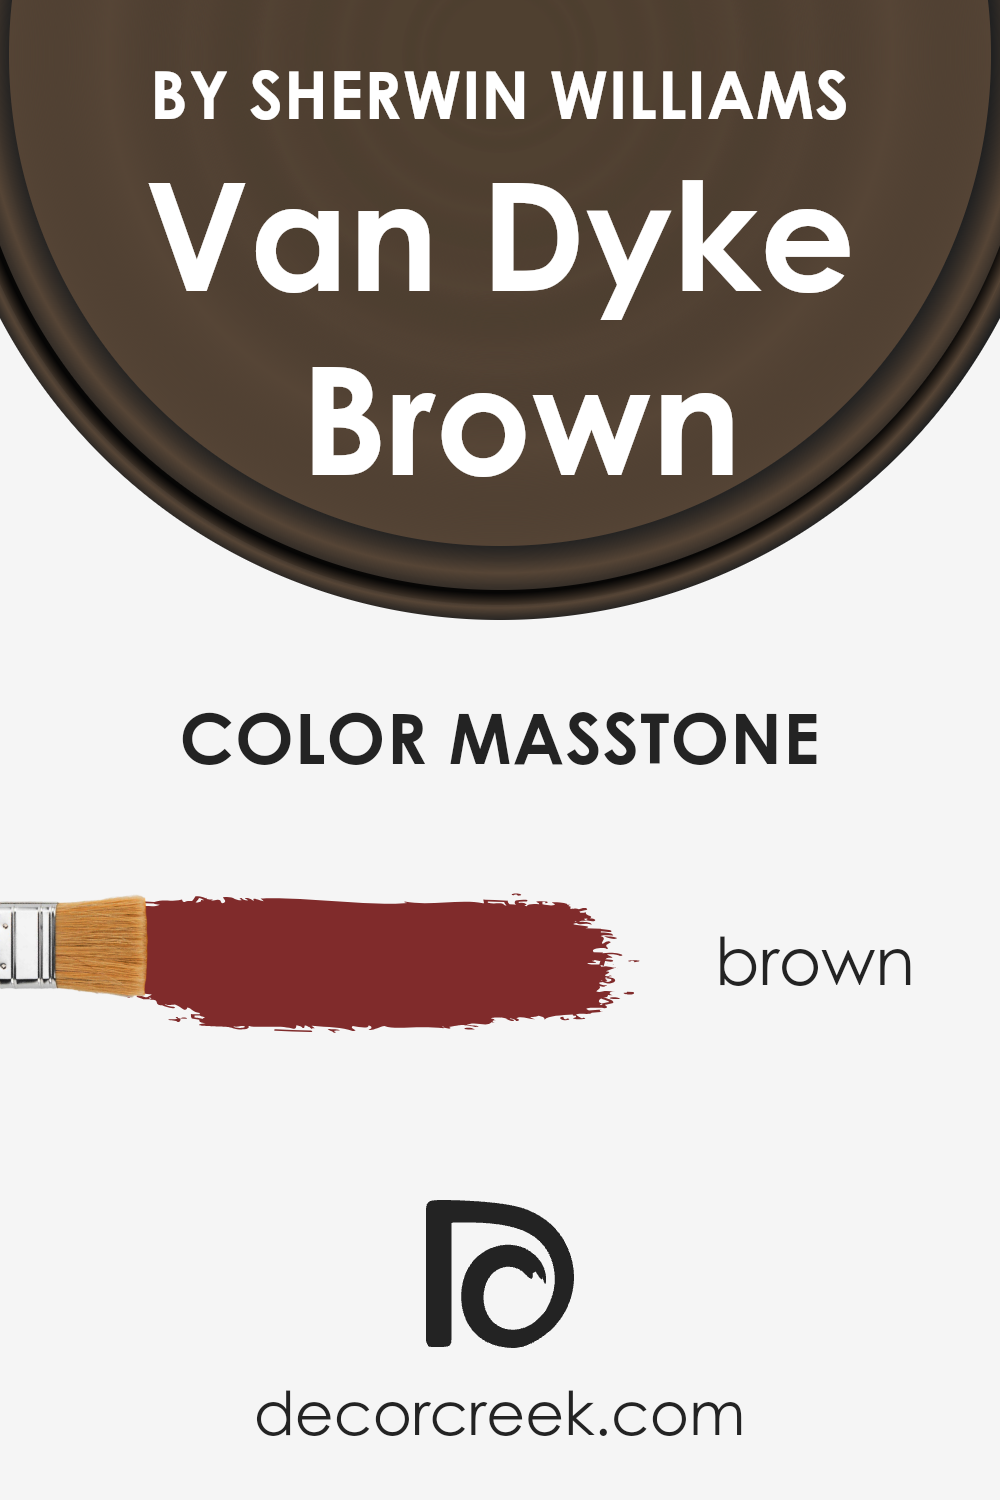 what_is_the_masstone_of_van_dyke_brown_sw_7041